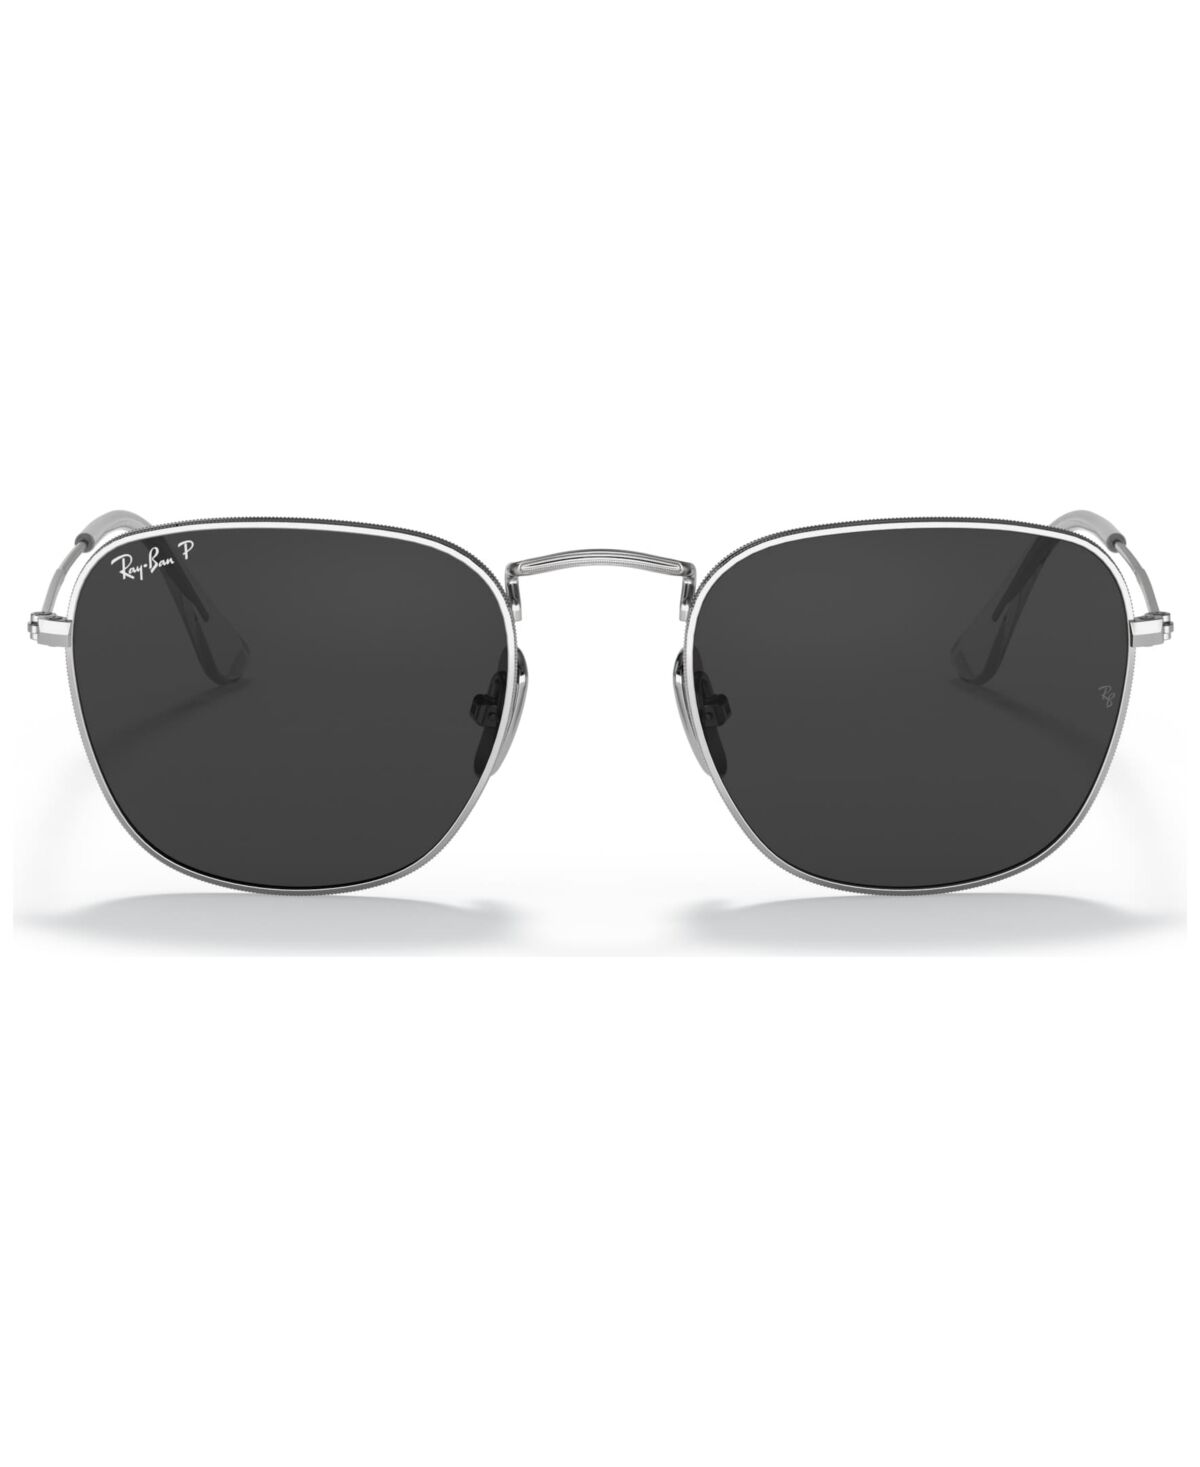 Ray-Ban Men's Polarized Sunglasses, RB8157 51 Frank Titanium - SILVER/POLAR BLACK